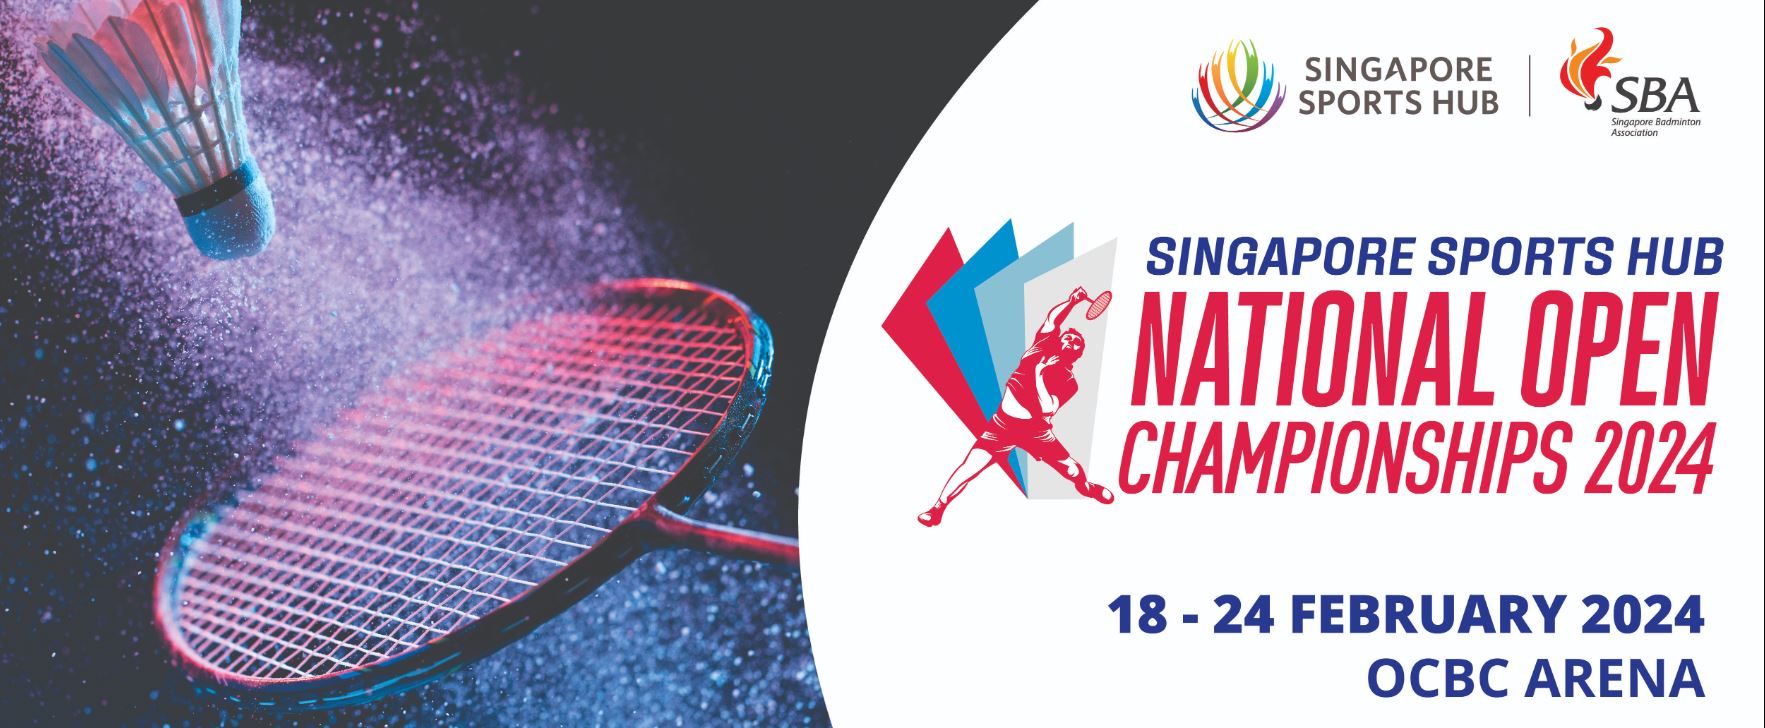 Singapore Sports Hub National Open Championships 2024